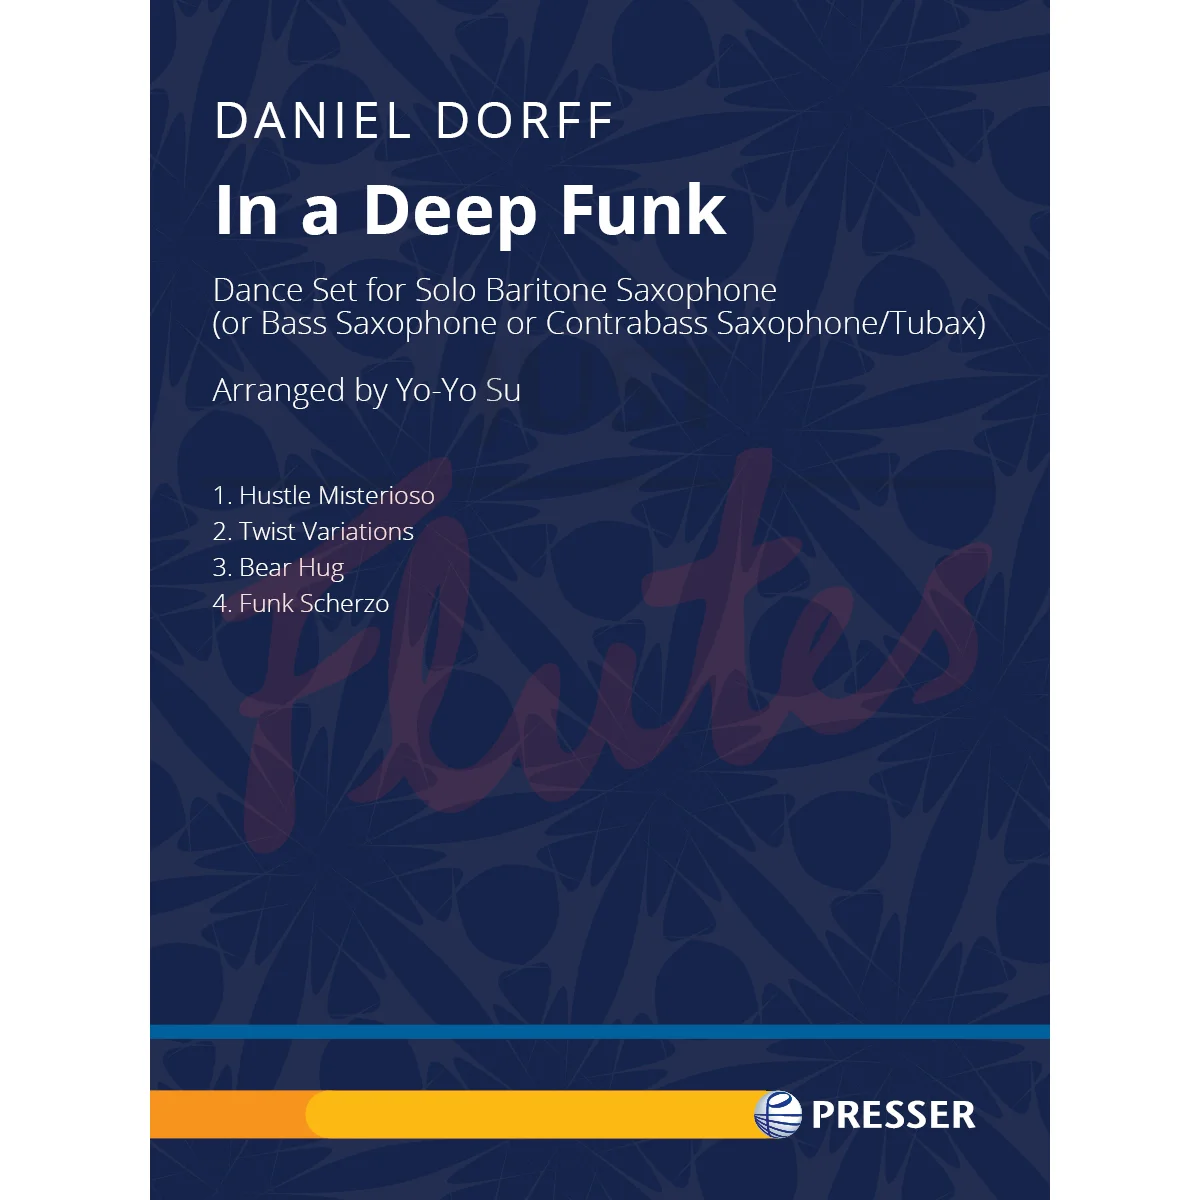 In a Deep Funk: Dance Set for Solo Baritone Saxophone